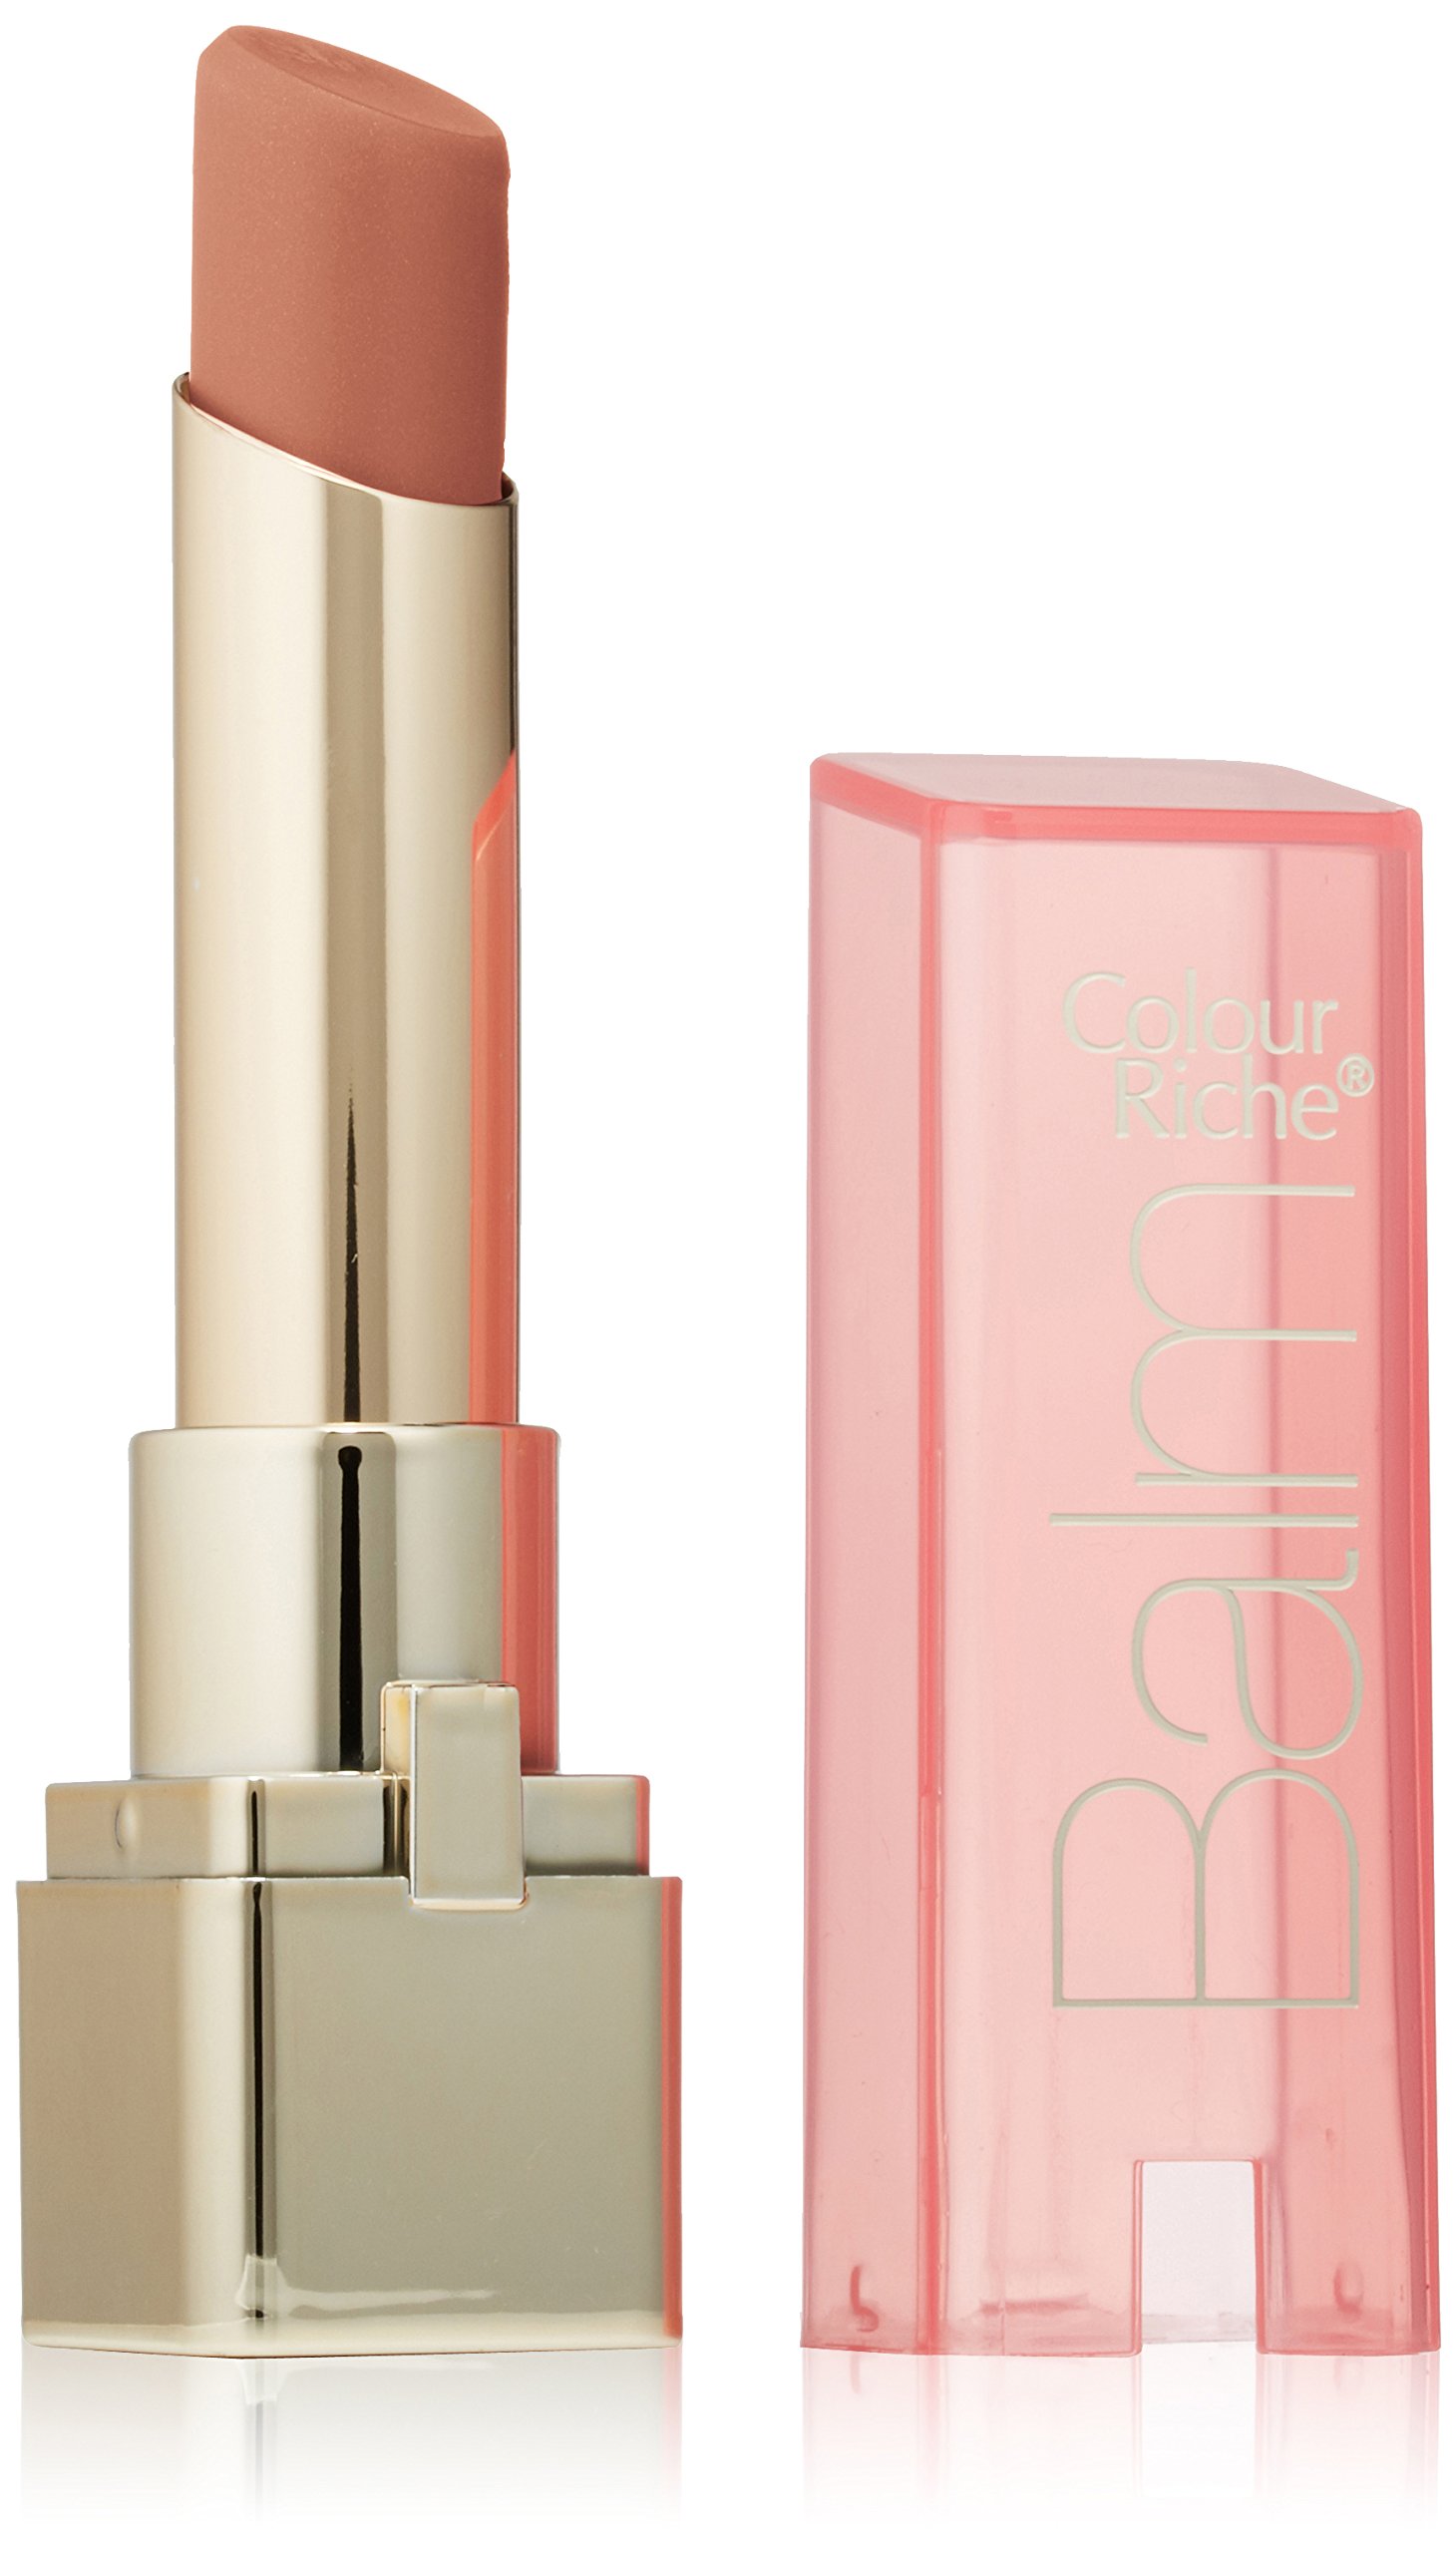 L’Oreal Paris Colour Riche Lip Balm, Pink Satin, $6.97